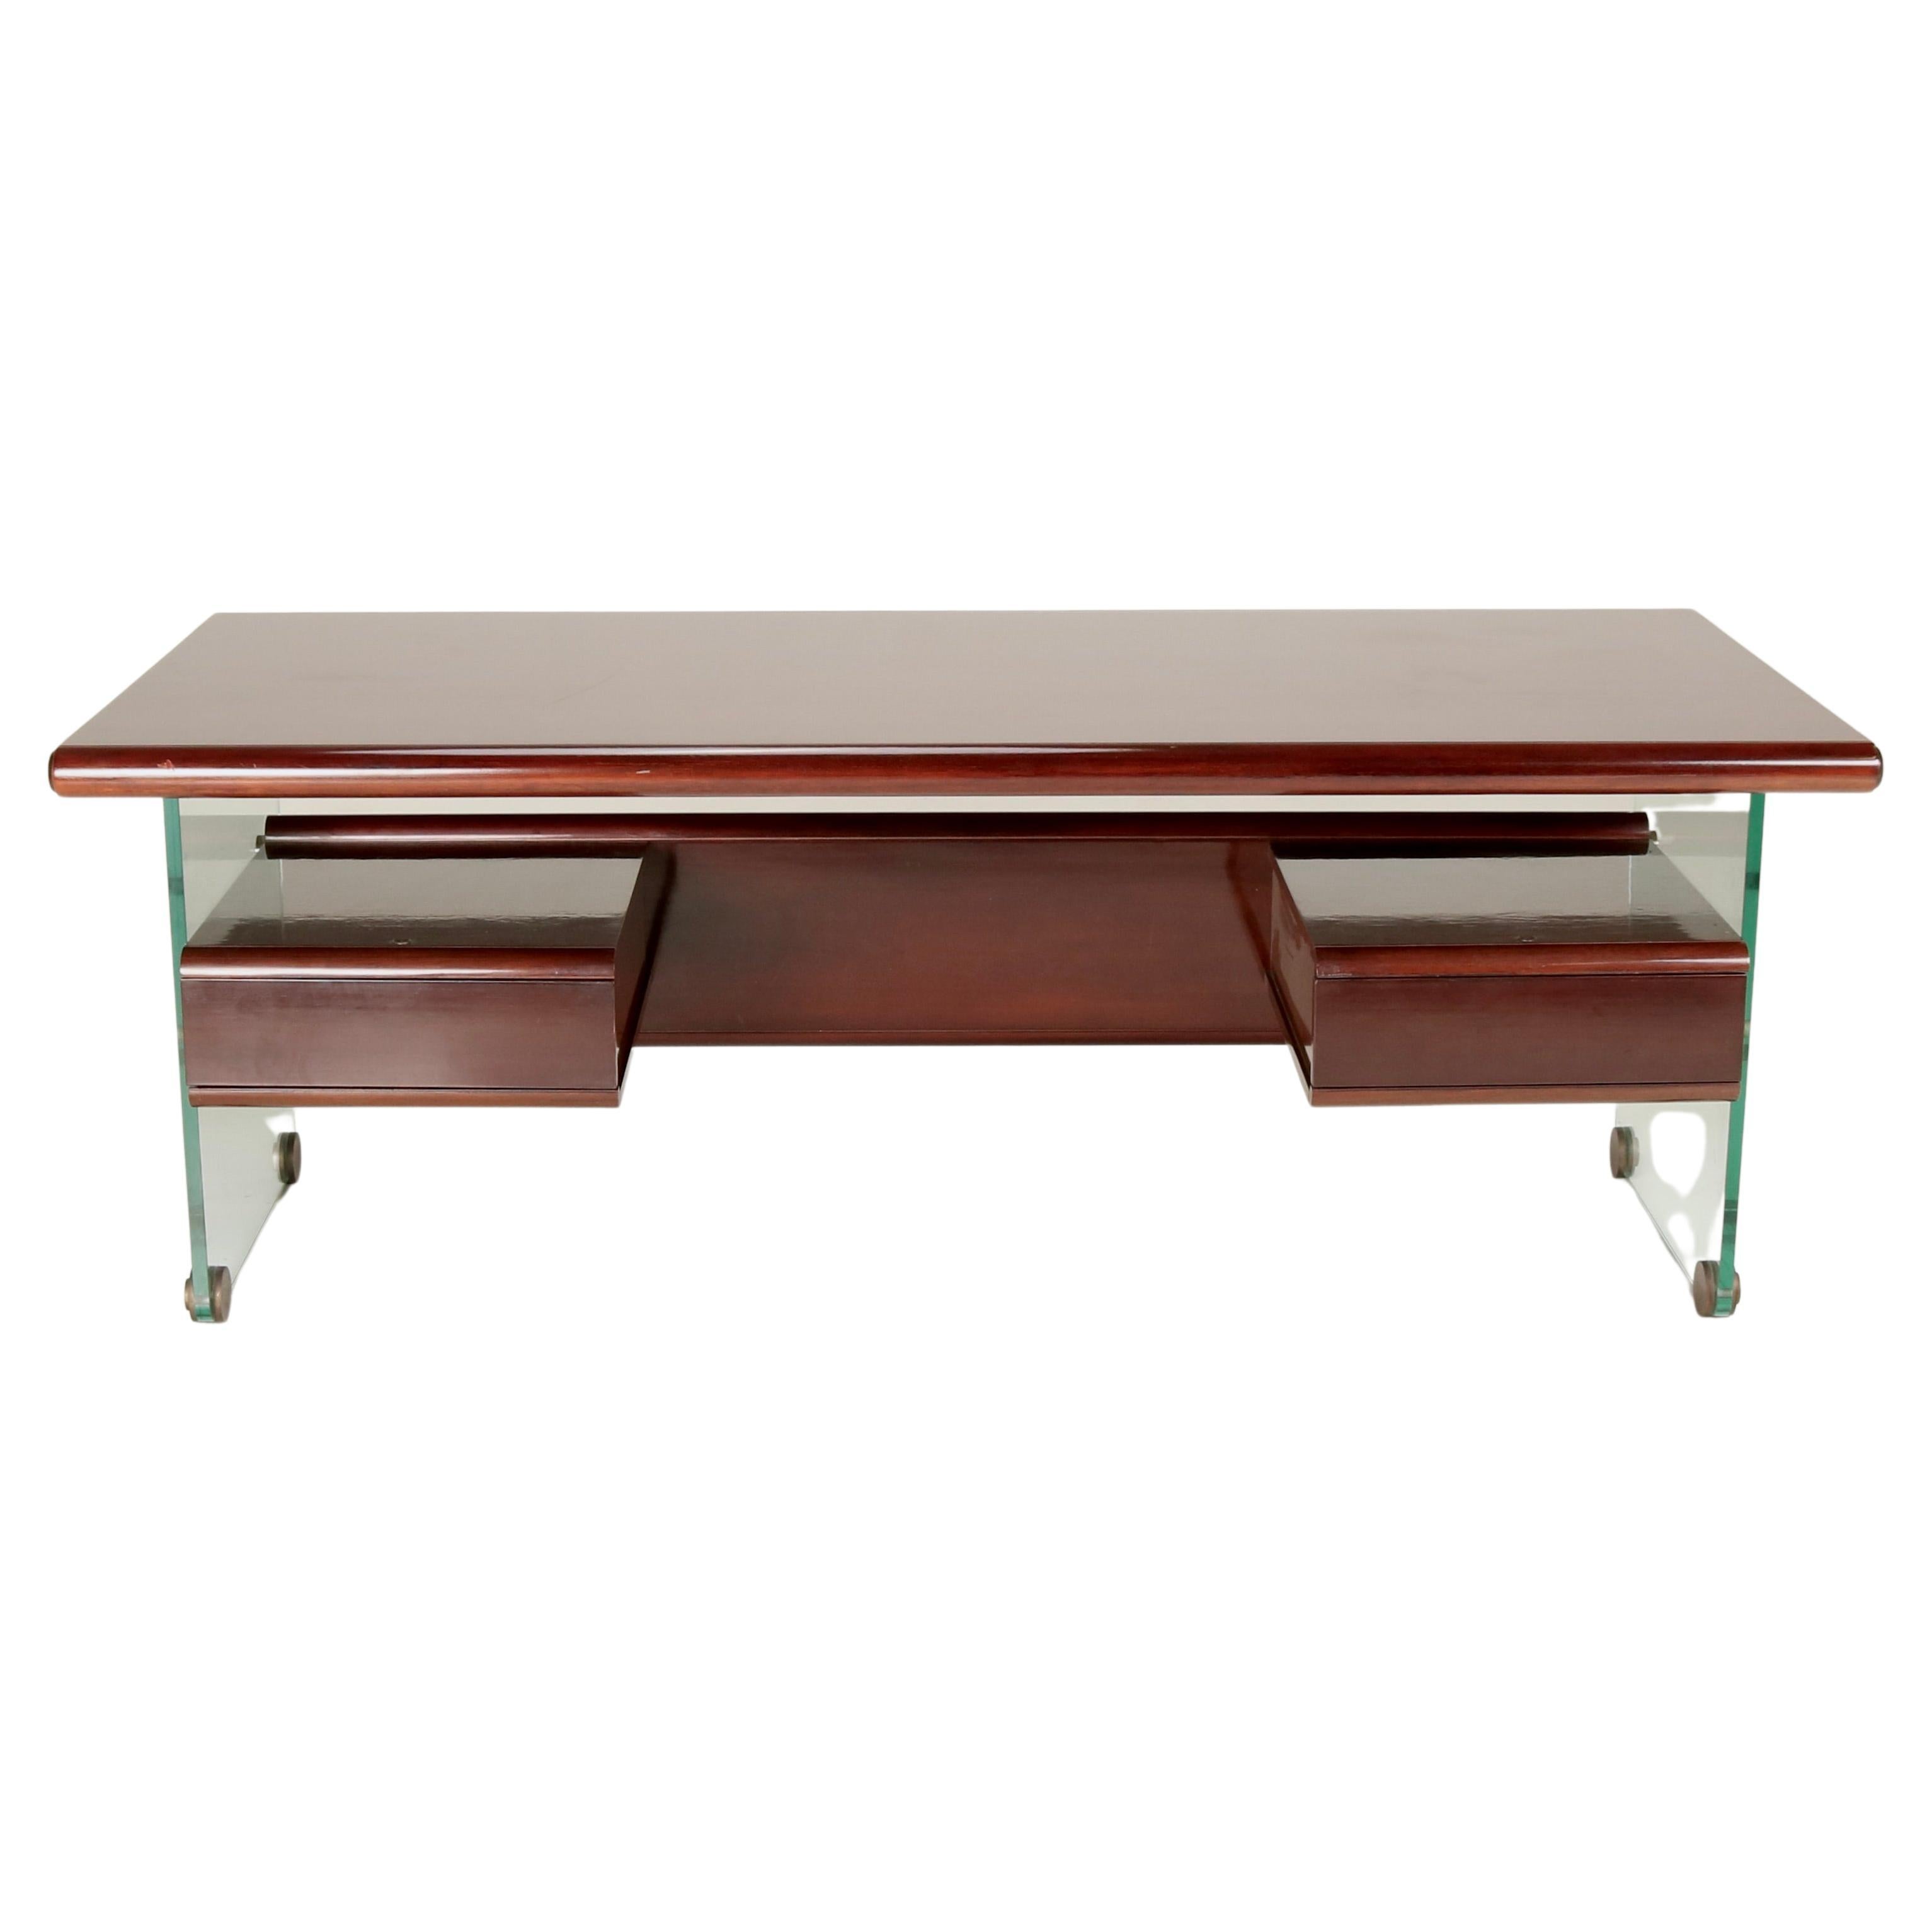 Fabio Lenci Elegant presidential Desk - Wood top and legs, Italian Design, 60s In Good Condition For Sale In Milan, IT